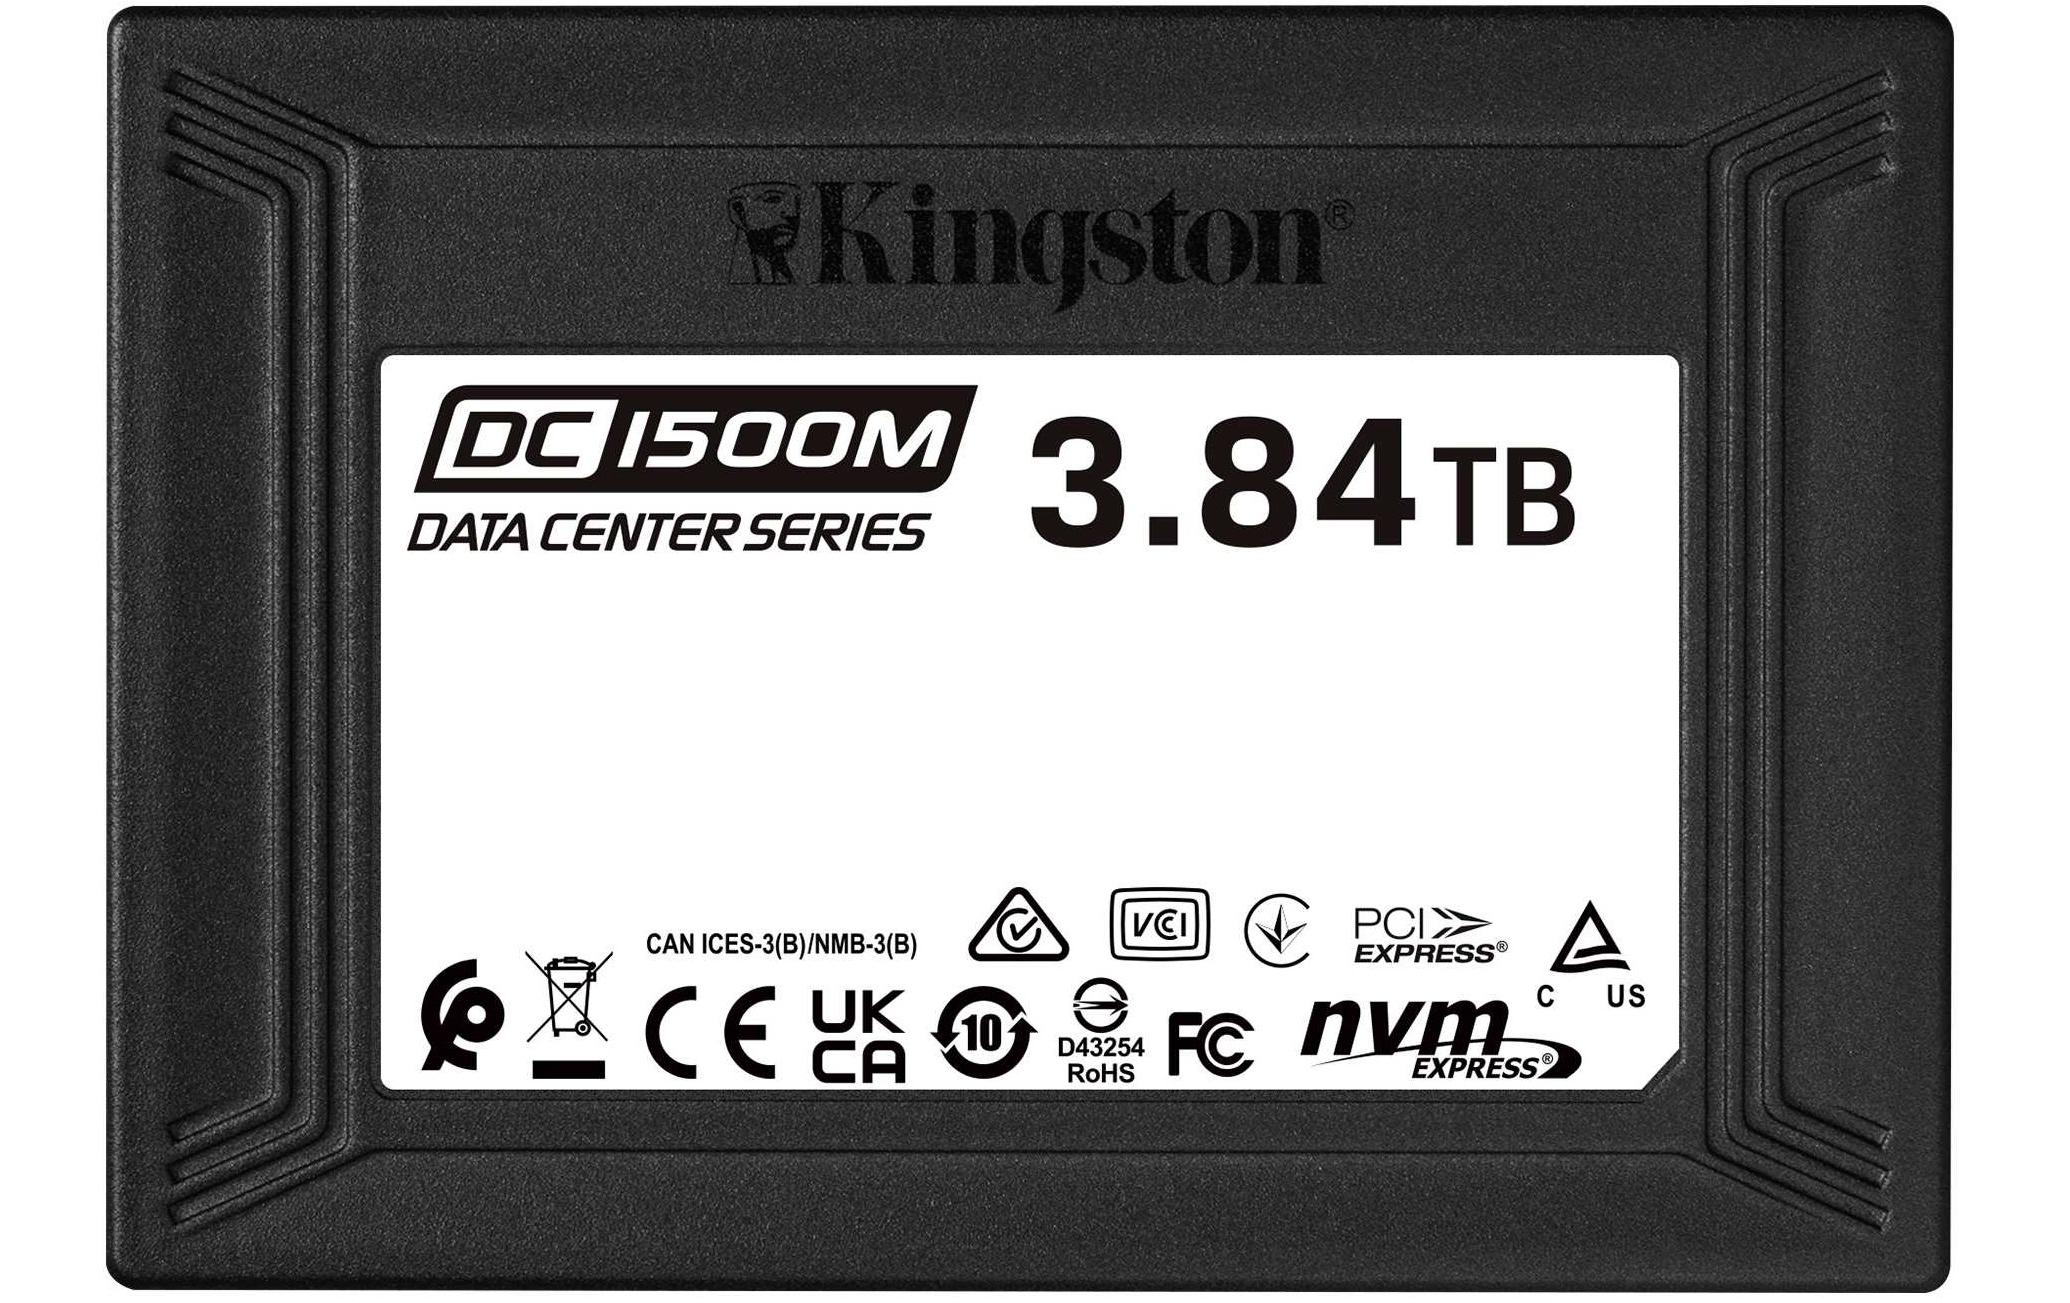 Kingston SSD DC1500M 2.5 NVMe 3840 GB Mixed Use